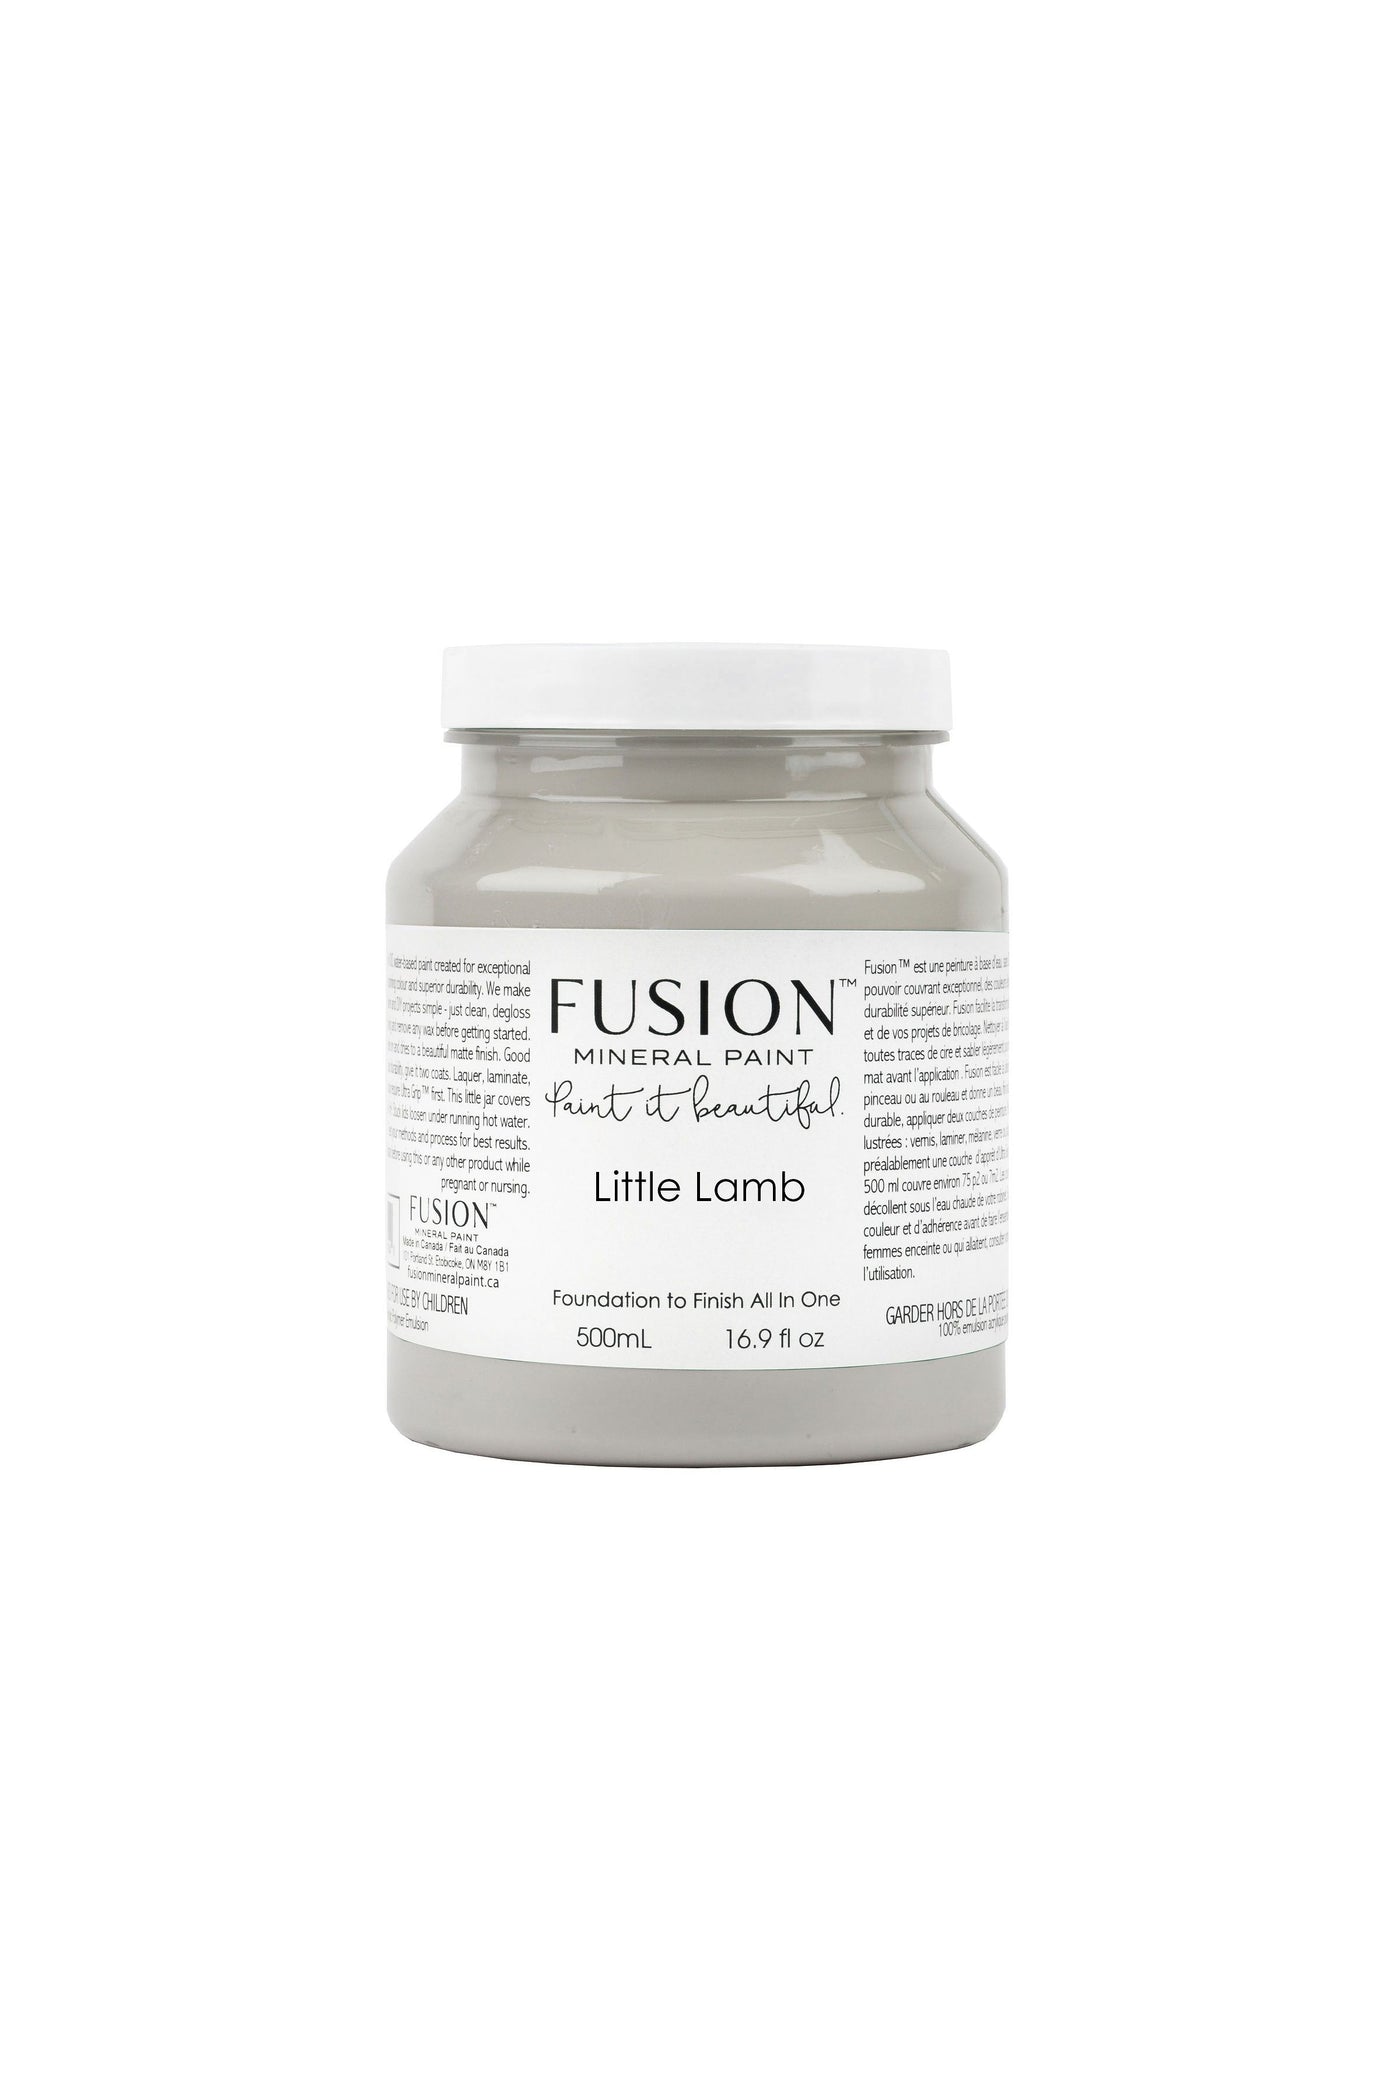 Fusion Mineral Paint - LITTLE LAMB classic grey 500ml